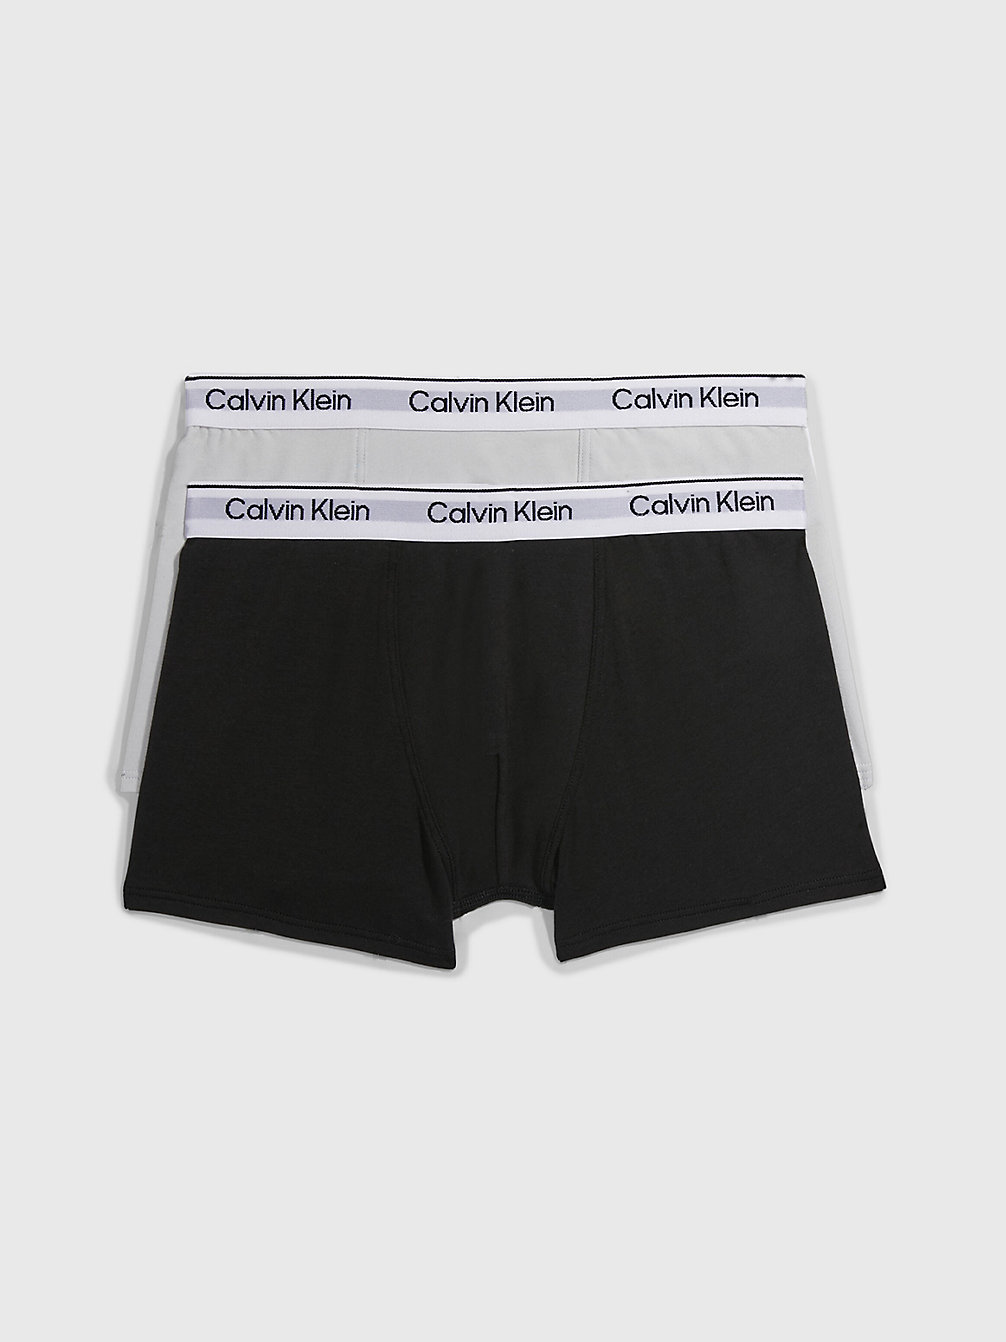 STONEGREY/PVHBLACK > 2-Pack Jongensbroeken - Modern Cotton > undefined jongens - Calvin Klein